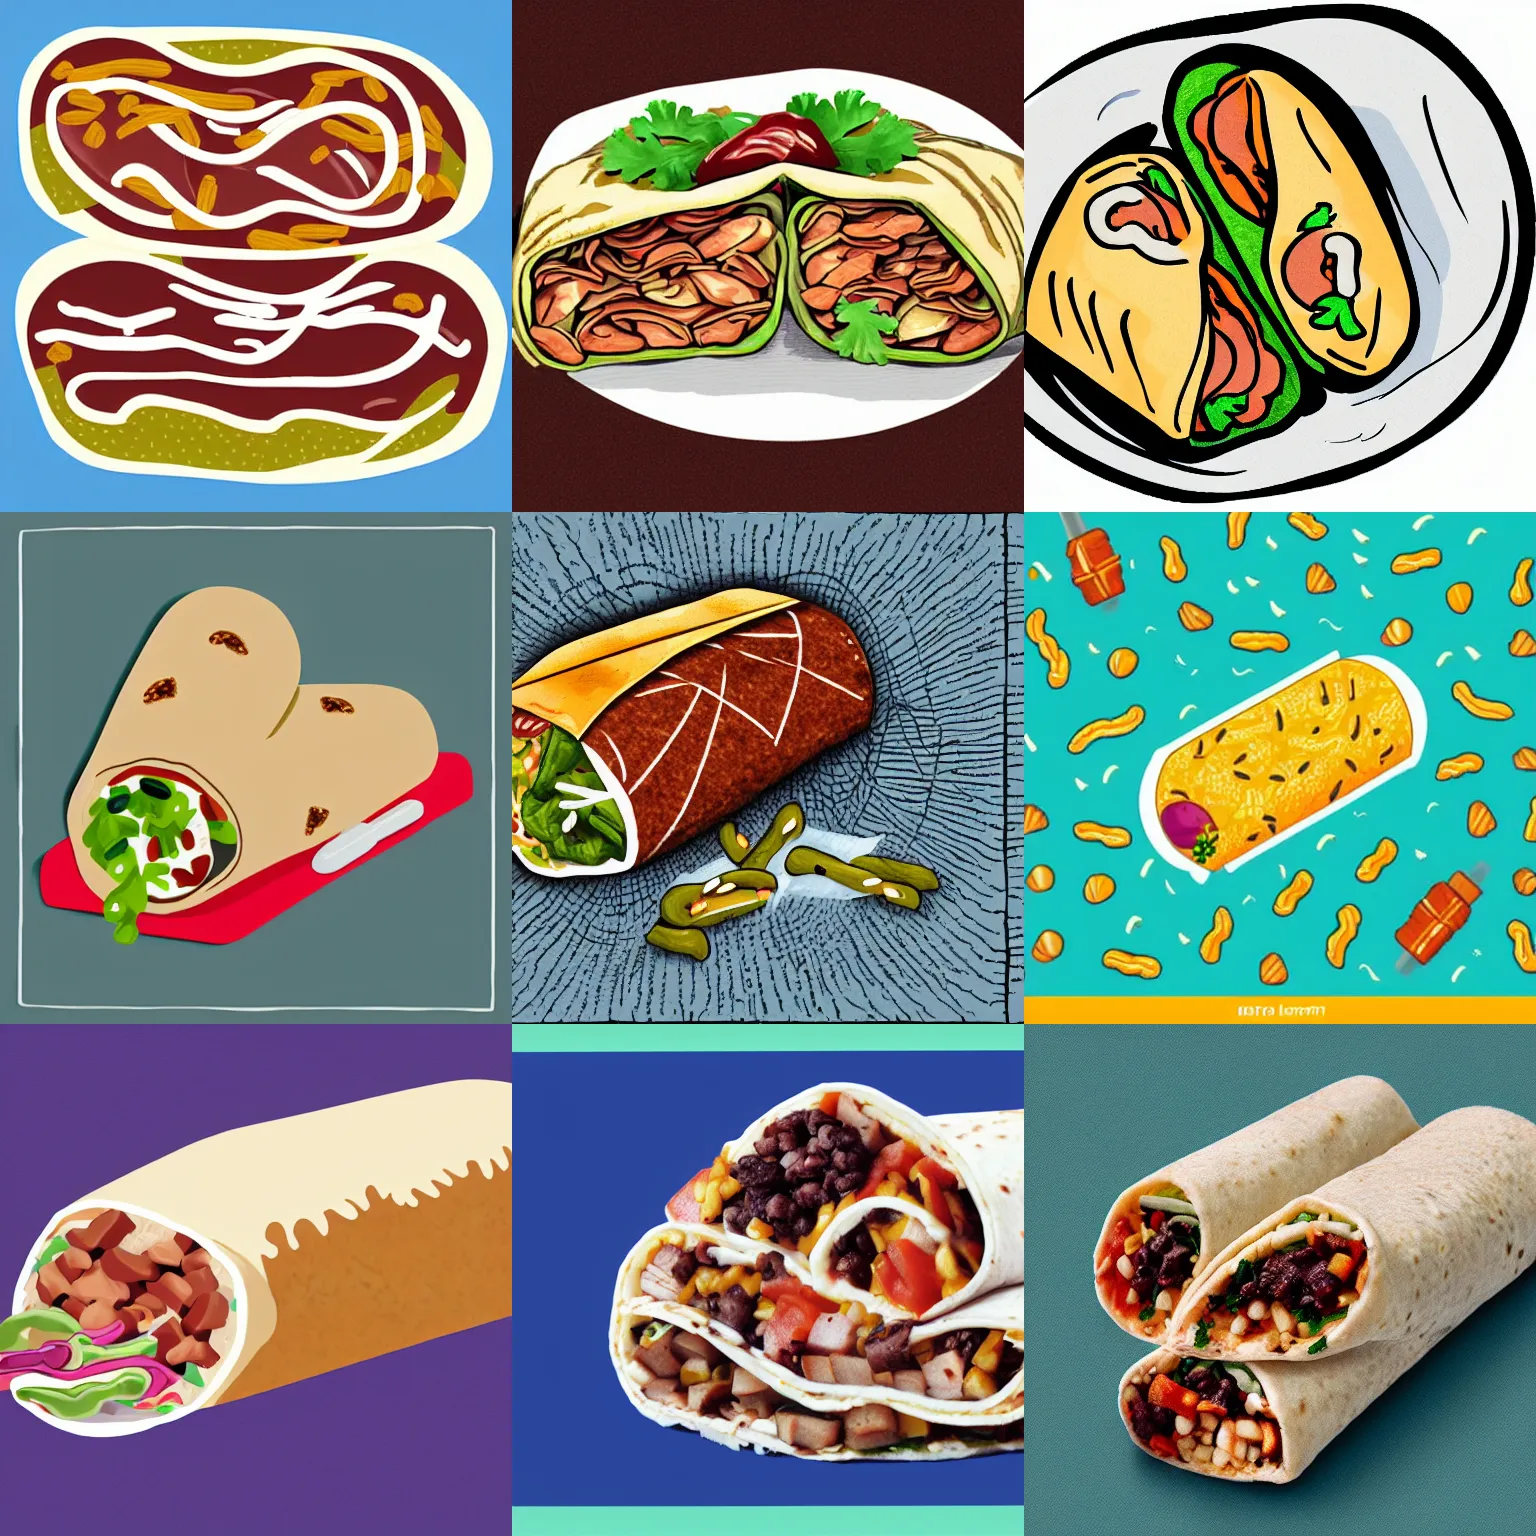 Prompt: medical illustration of a burrito